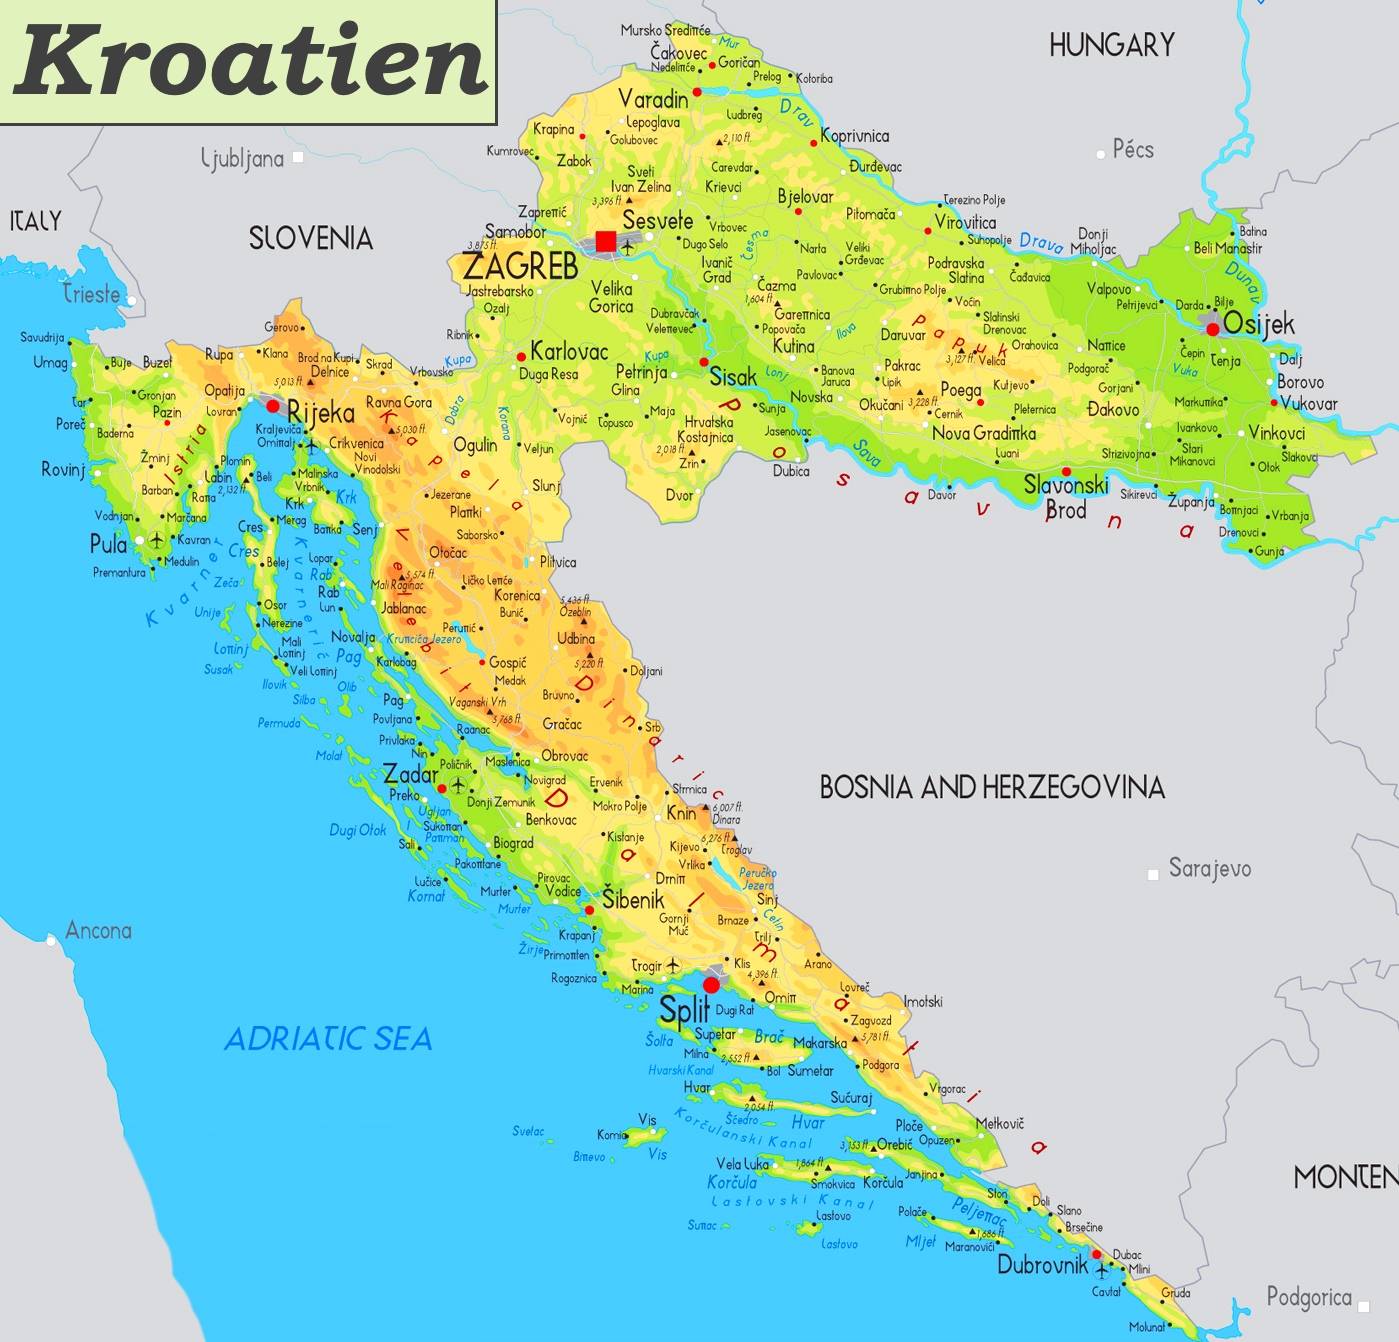 Аэропорты хорватии на карте, список аэропортов хорватии